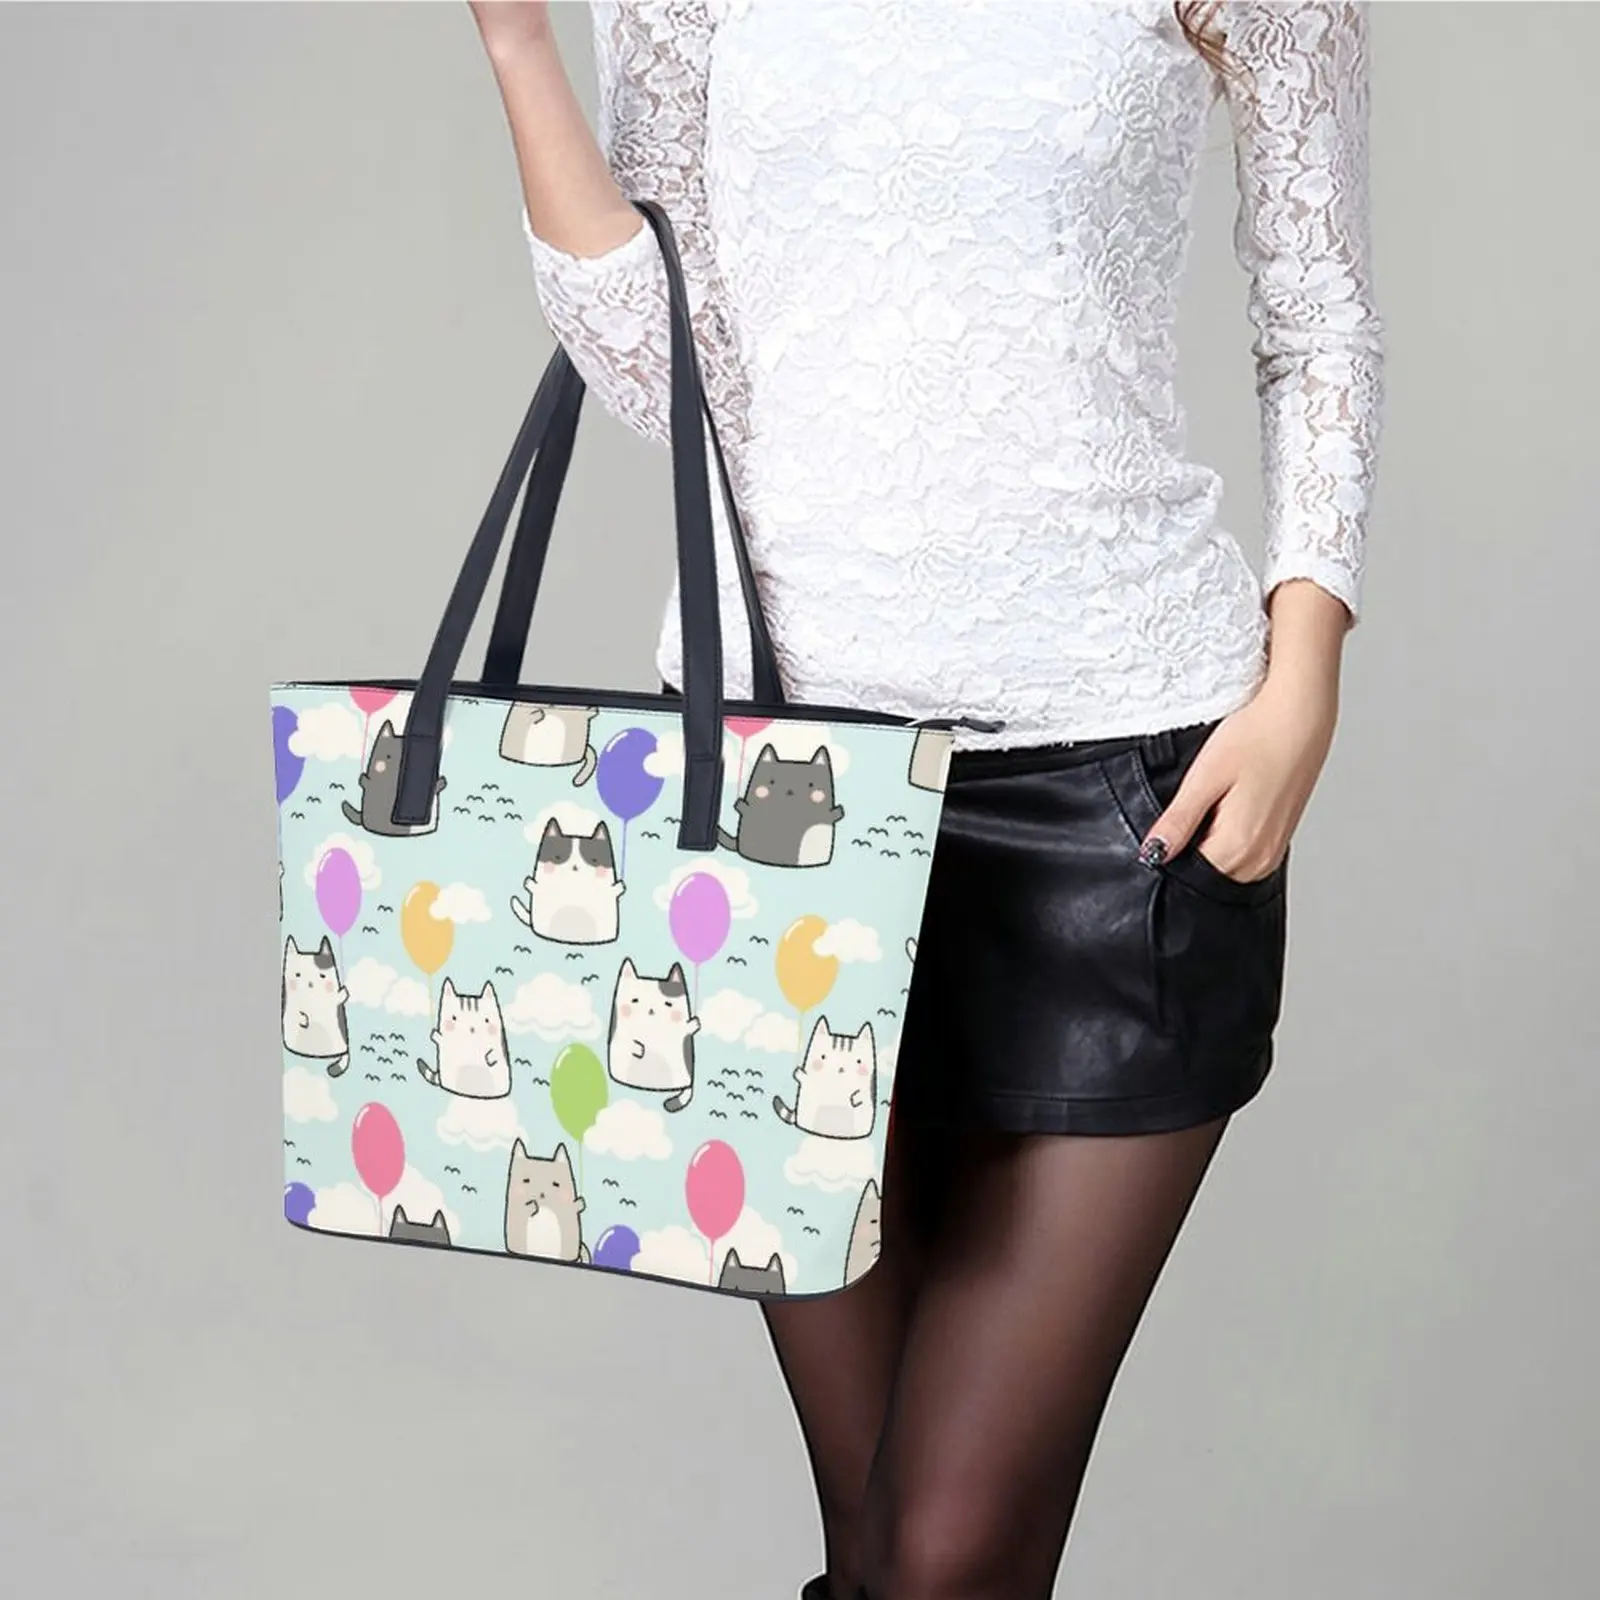 Funny Japanese Anime Handbags Cute Kawaii Cats Leisure Shoulder Bag Business PU Leather Tote Bag Lady Pocket Print Shopper Bags images - 6